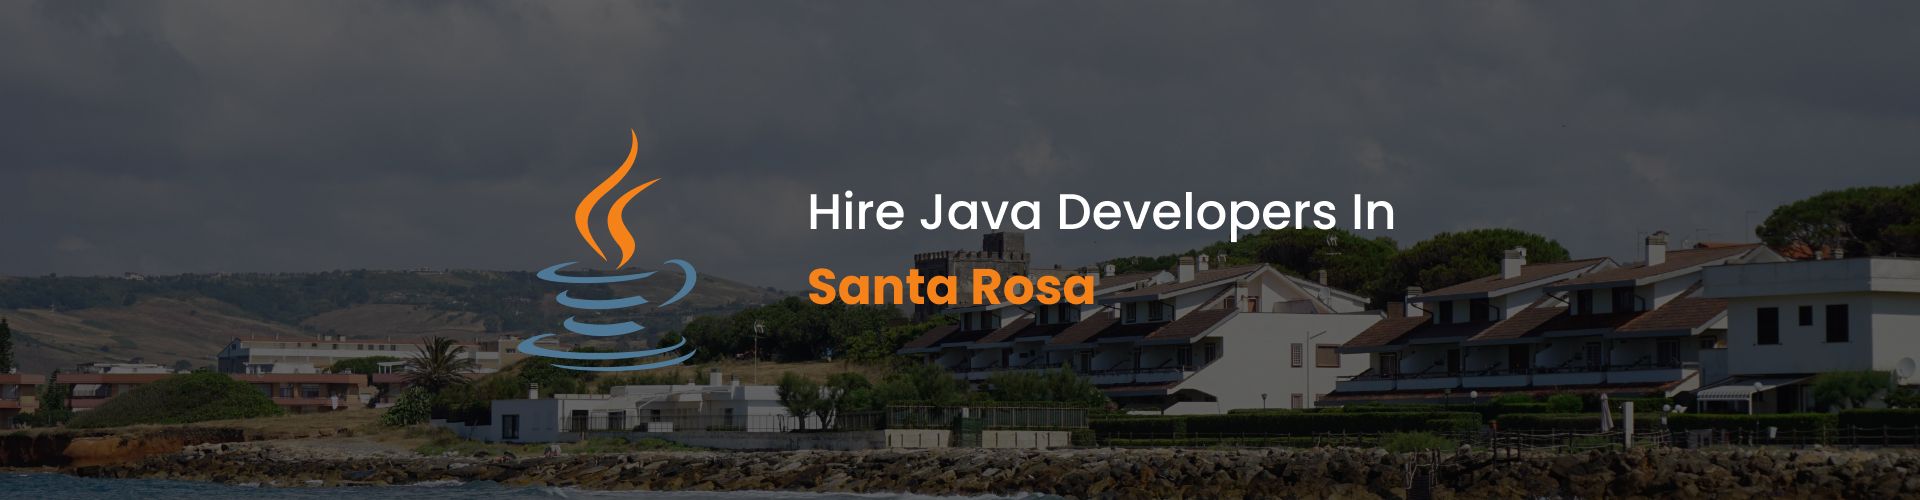 hire java developers in santa rosa